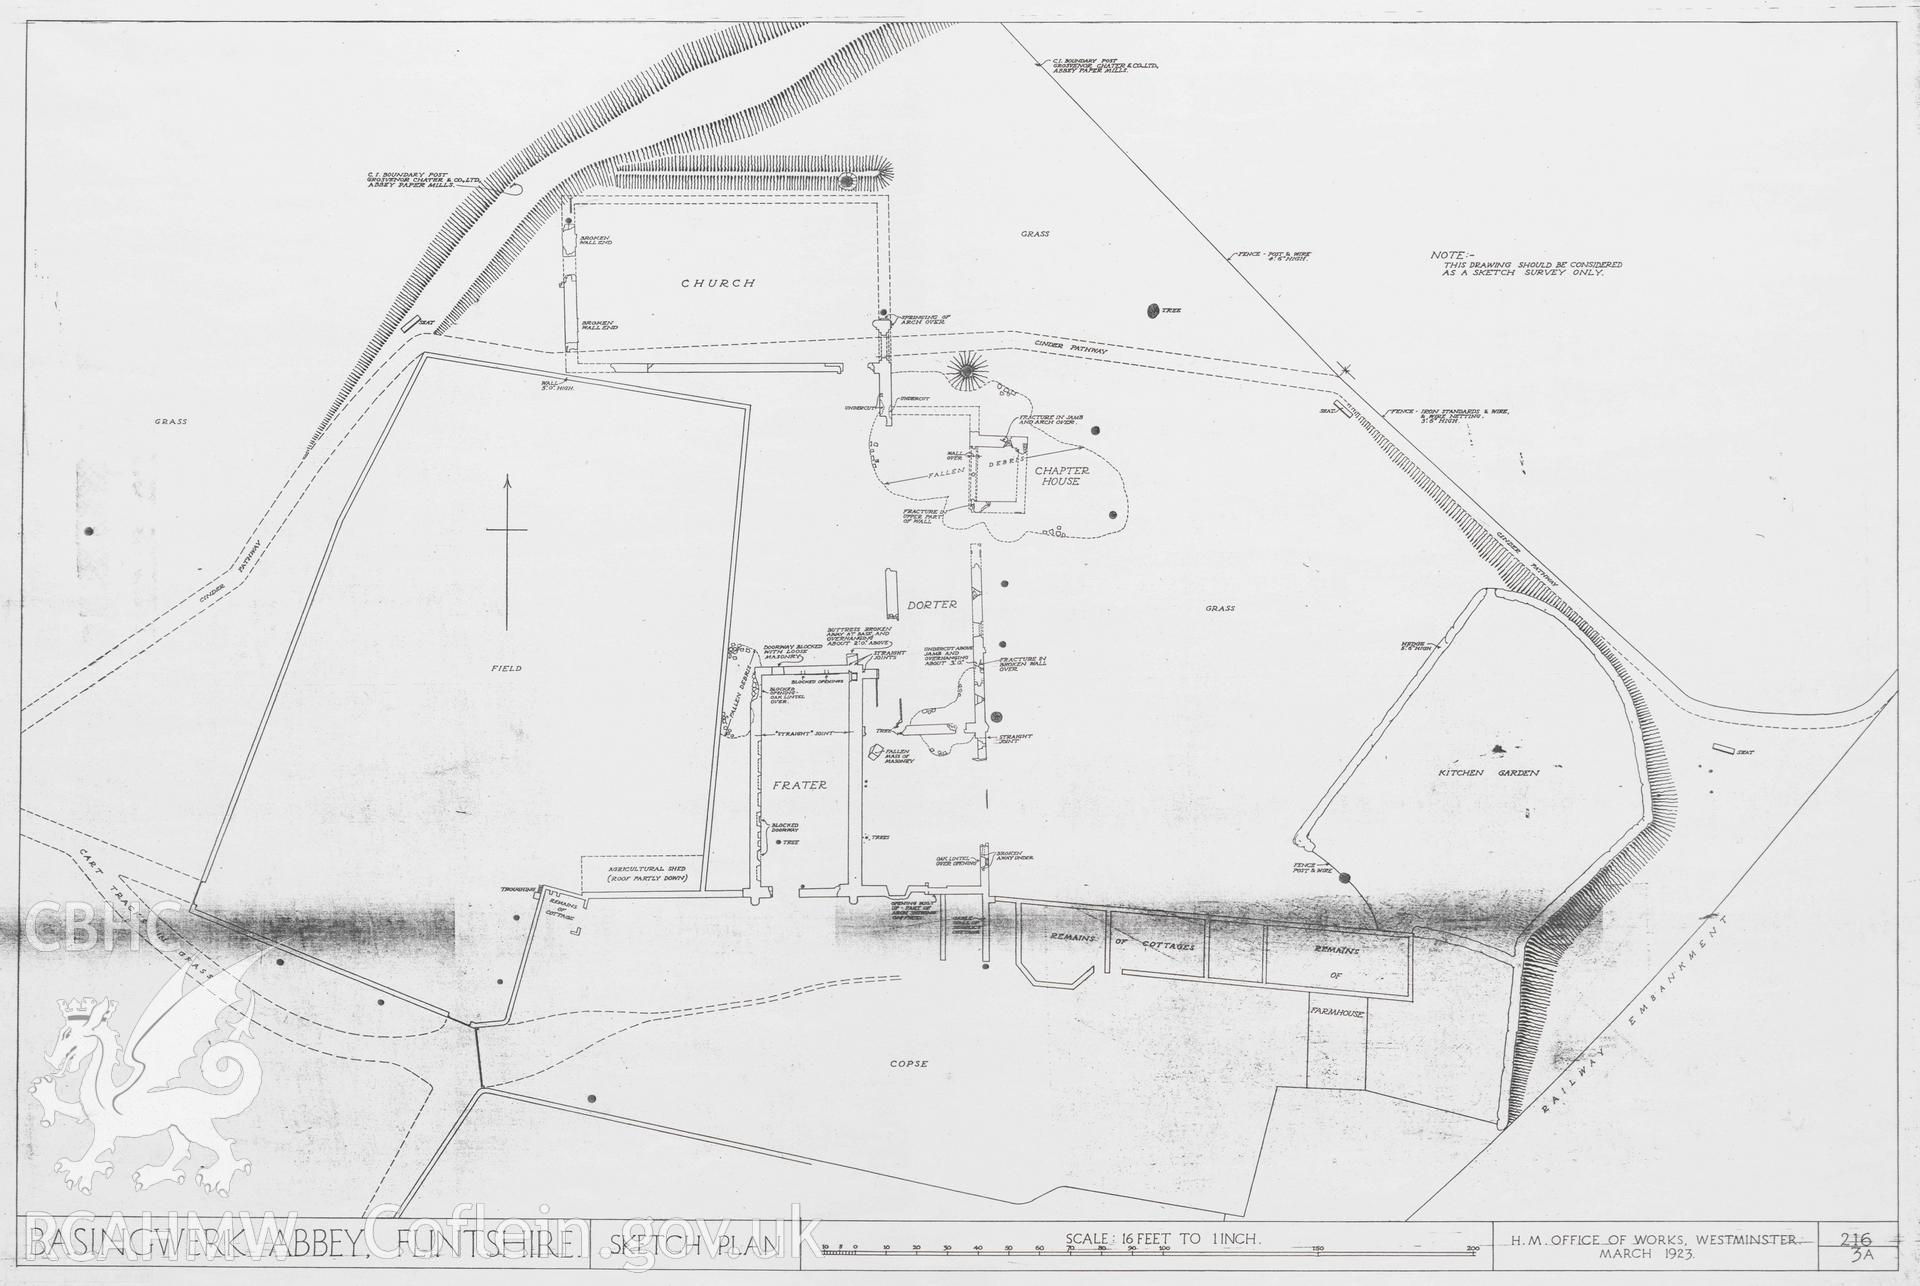 Cadw guardianship monument drawing of Basingwerk Abbey. Plan. Cadw Ref. No. 216/3a. Scale 1:192.